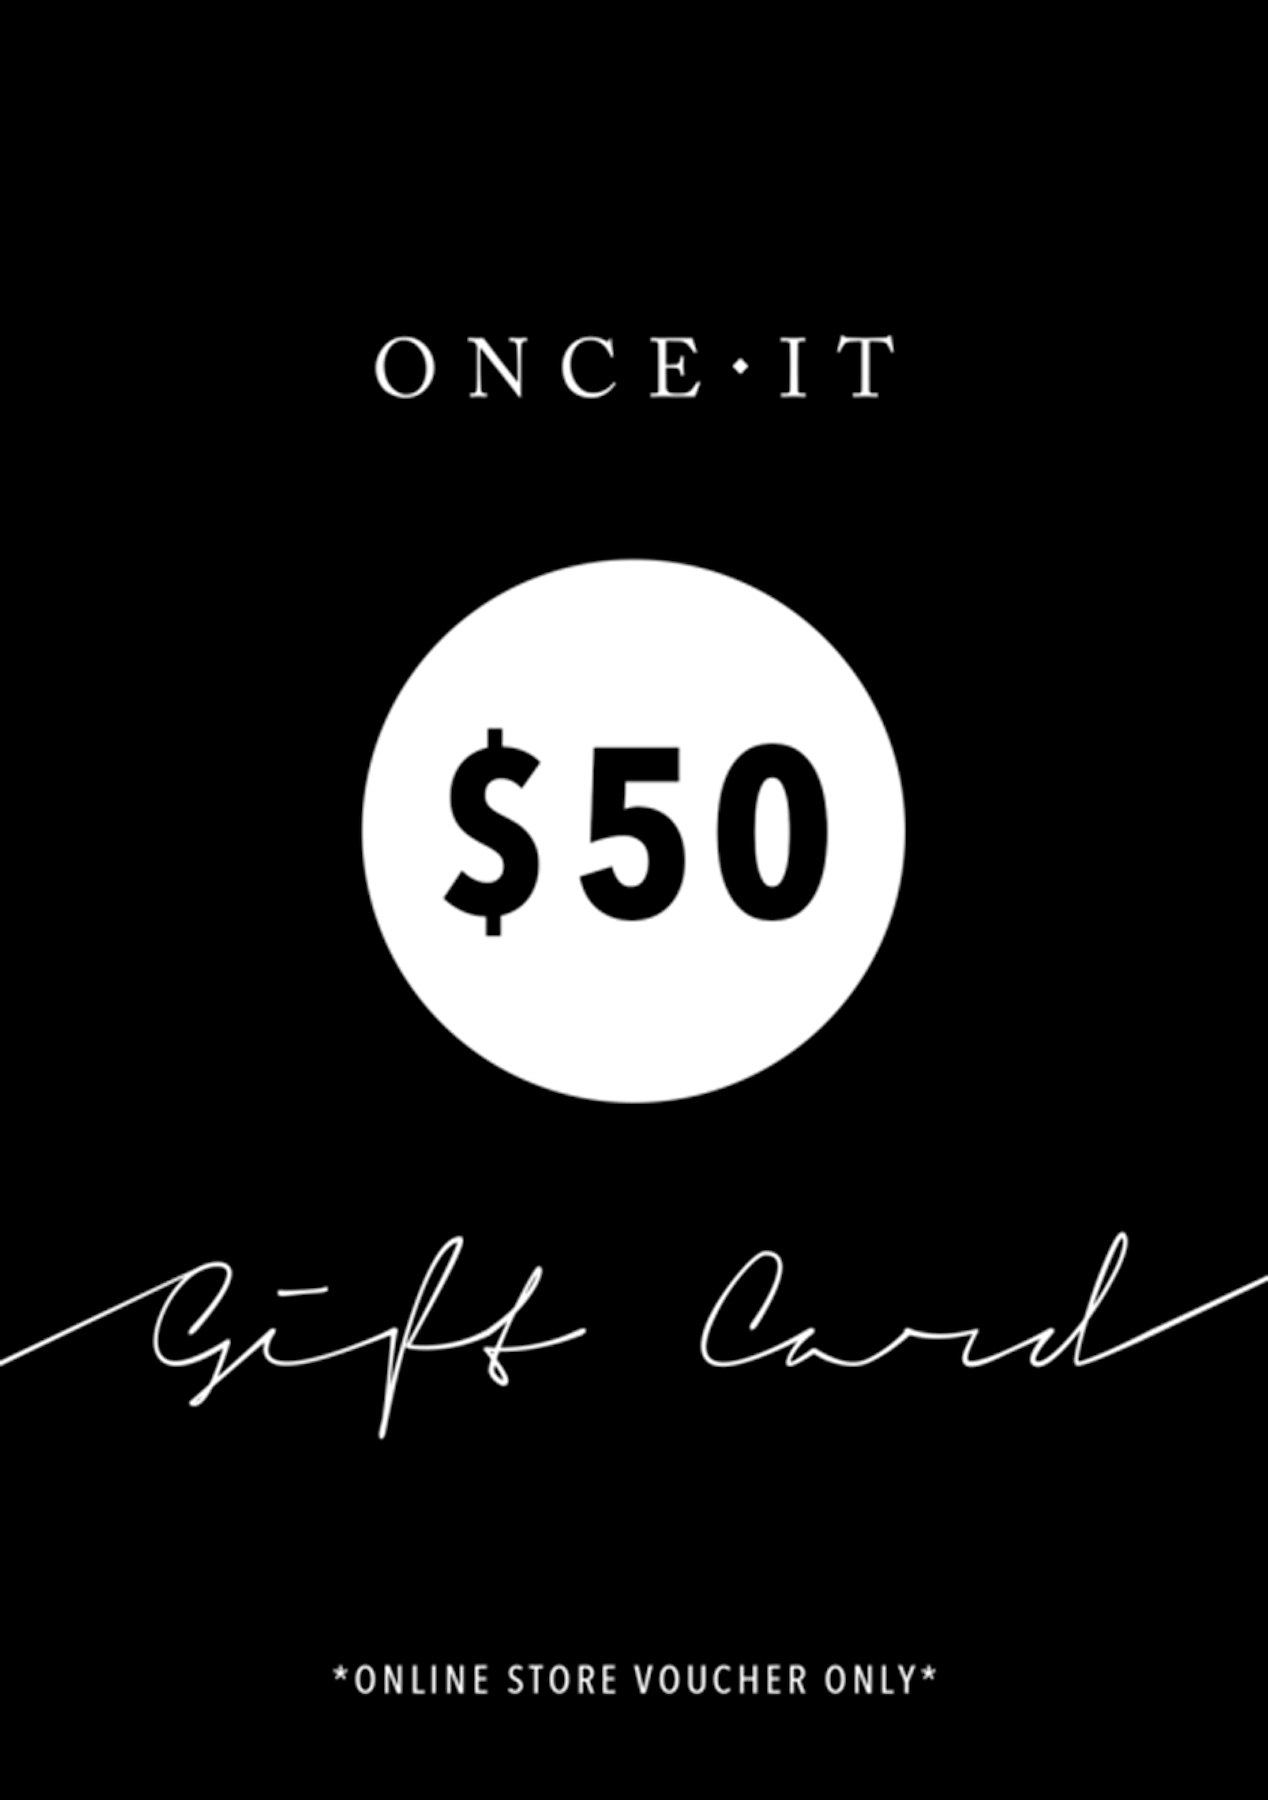 Onceit $50 Digital Gift Card